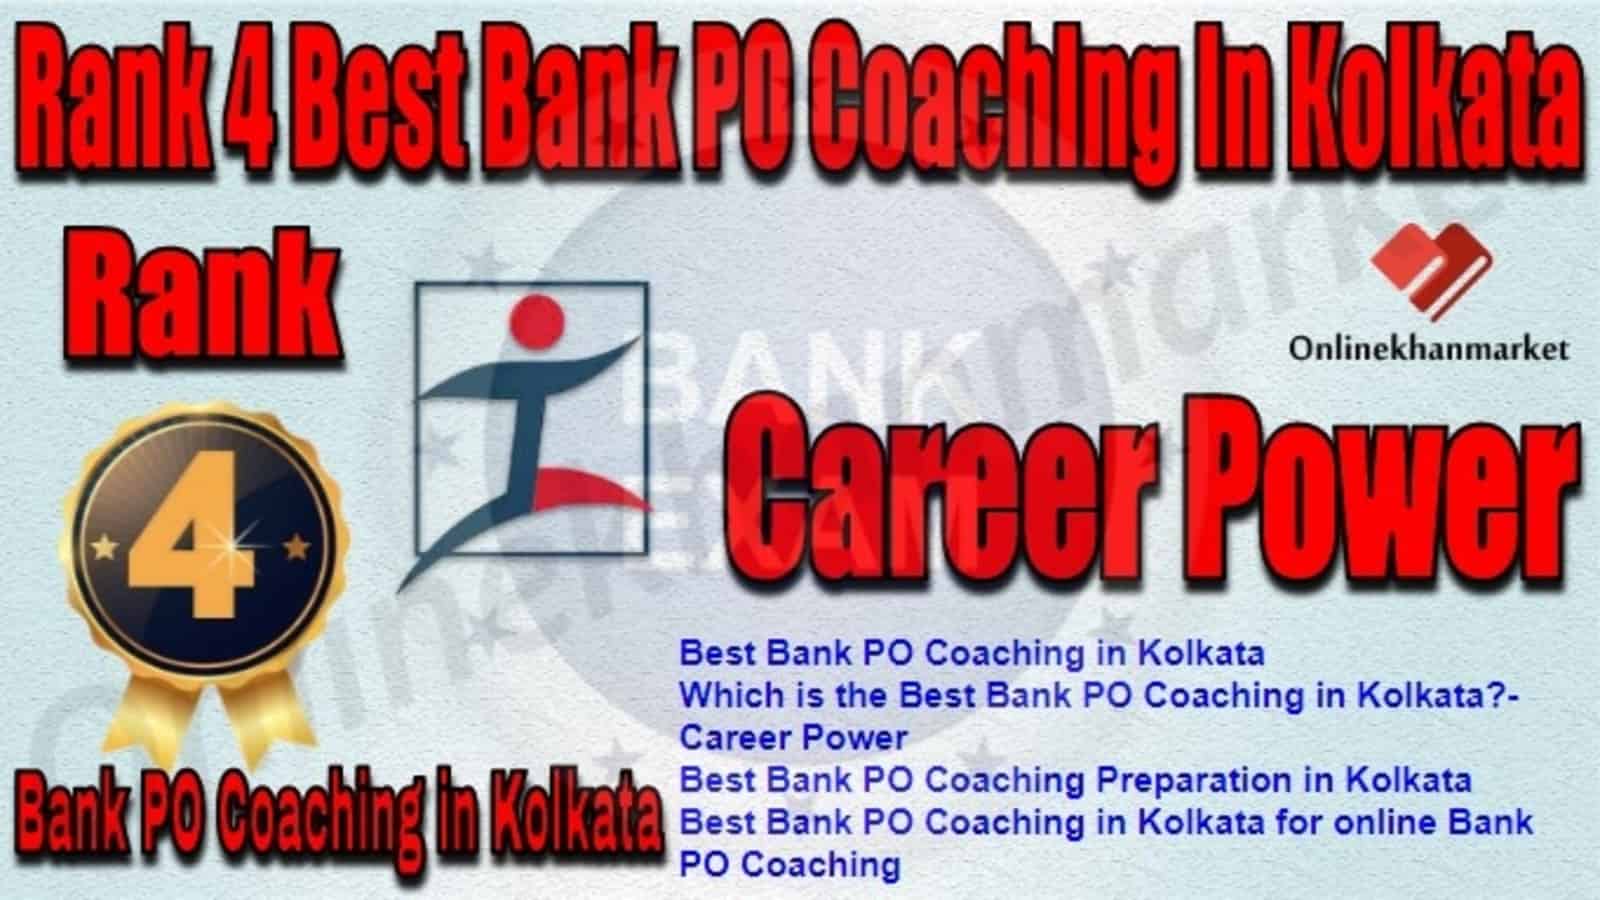 Rank 4 Best Bank PO Coaching in Kolkata